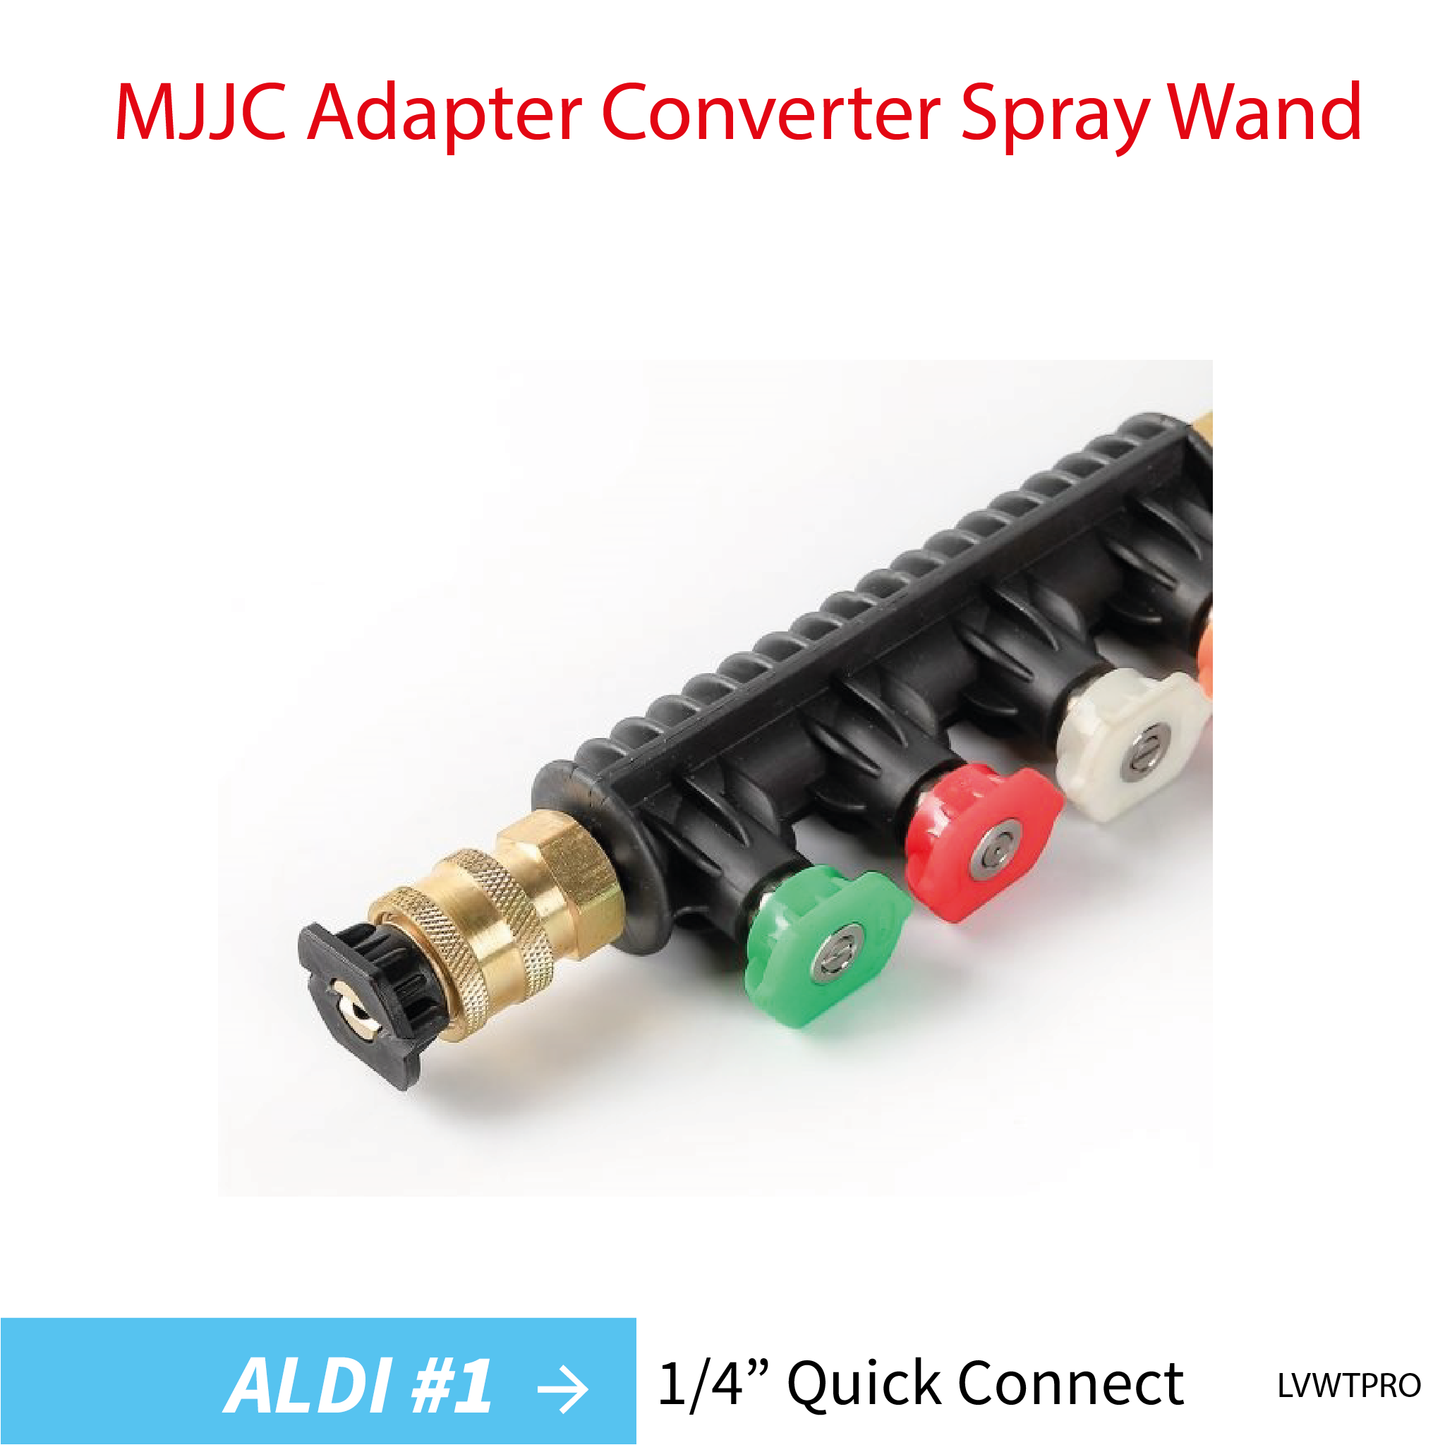 Aldi#1 MJJC Adapter Conversion Converter pressure washer Spray Wand with 5 spray tips